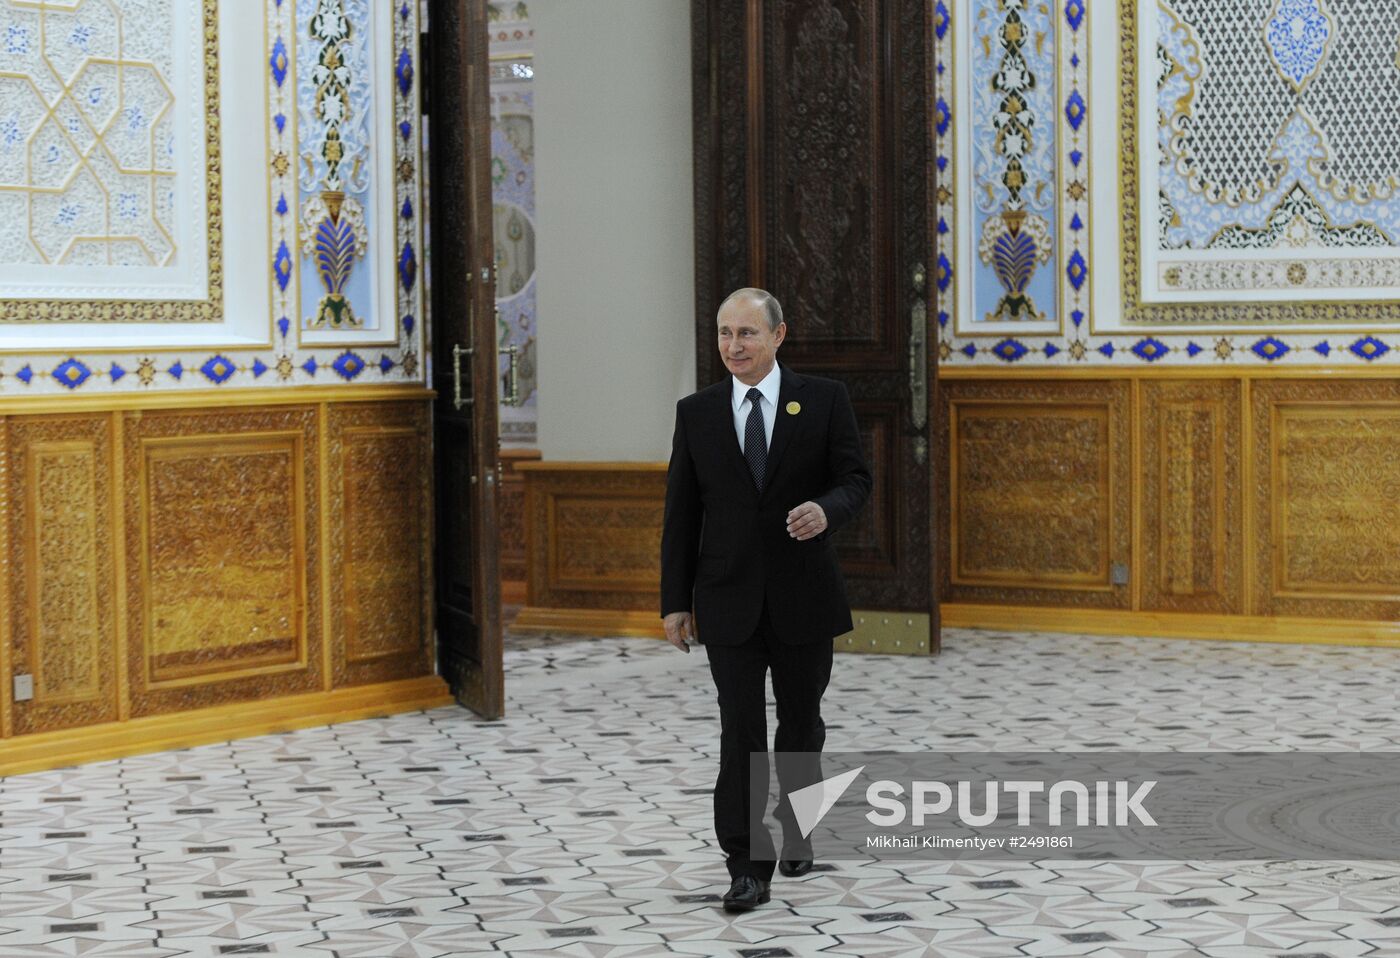 Vladimir Putin attends SCO summit